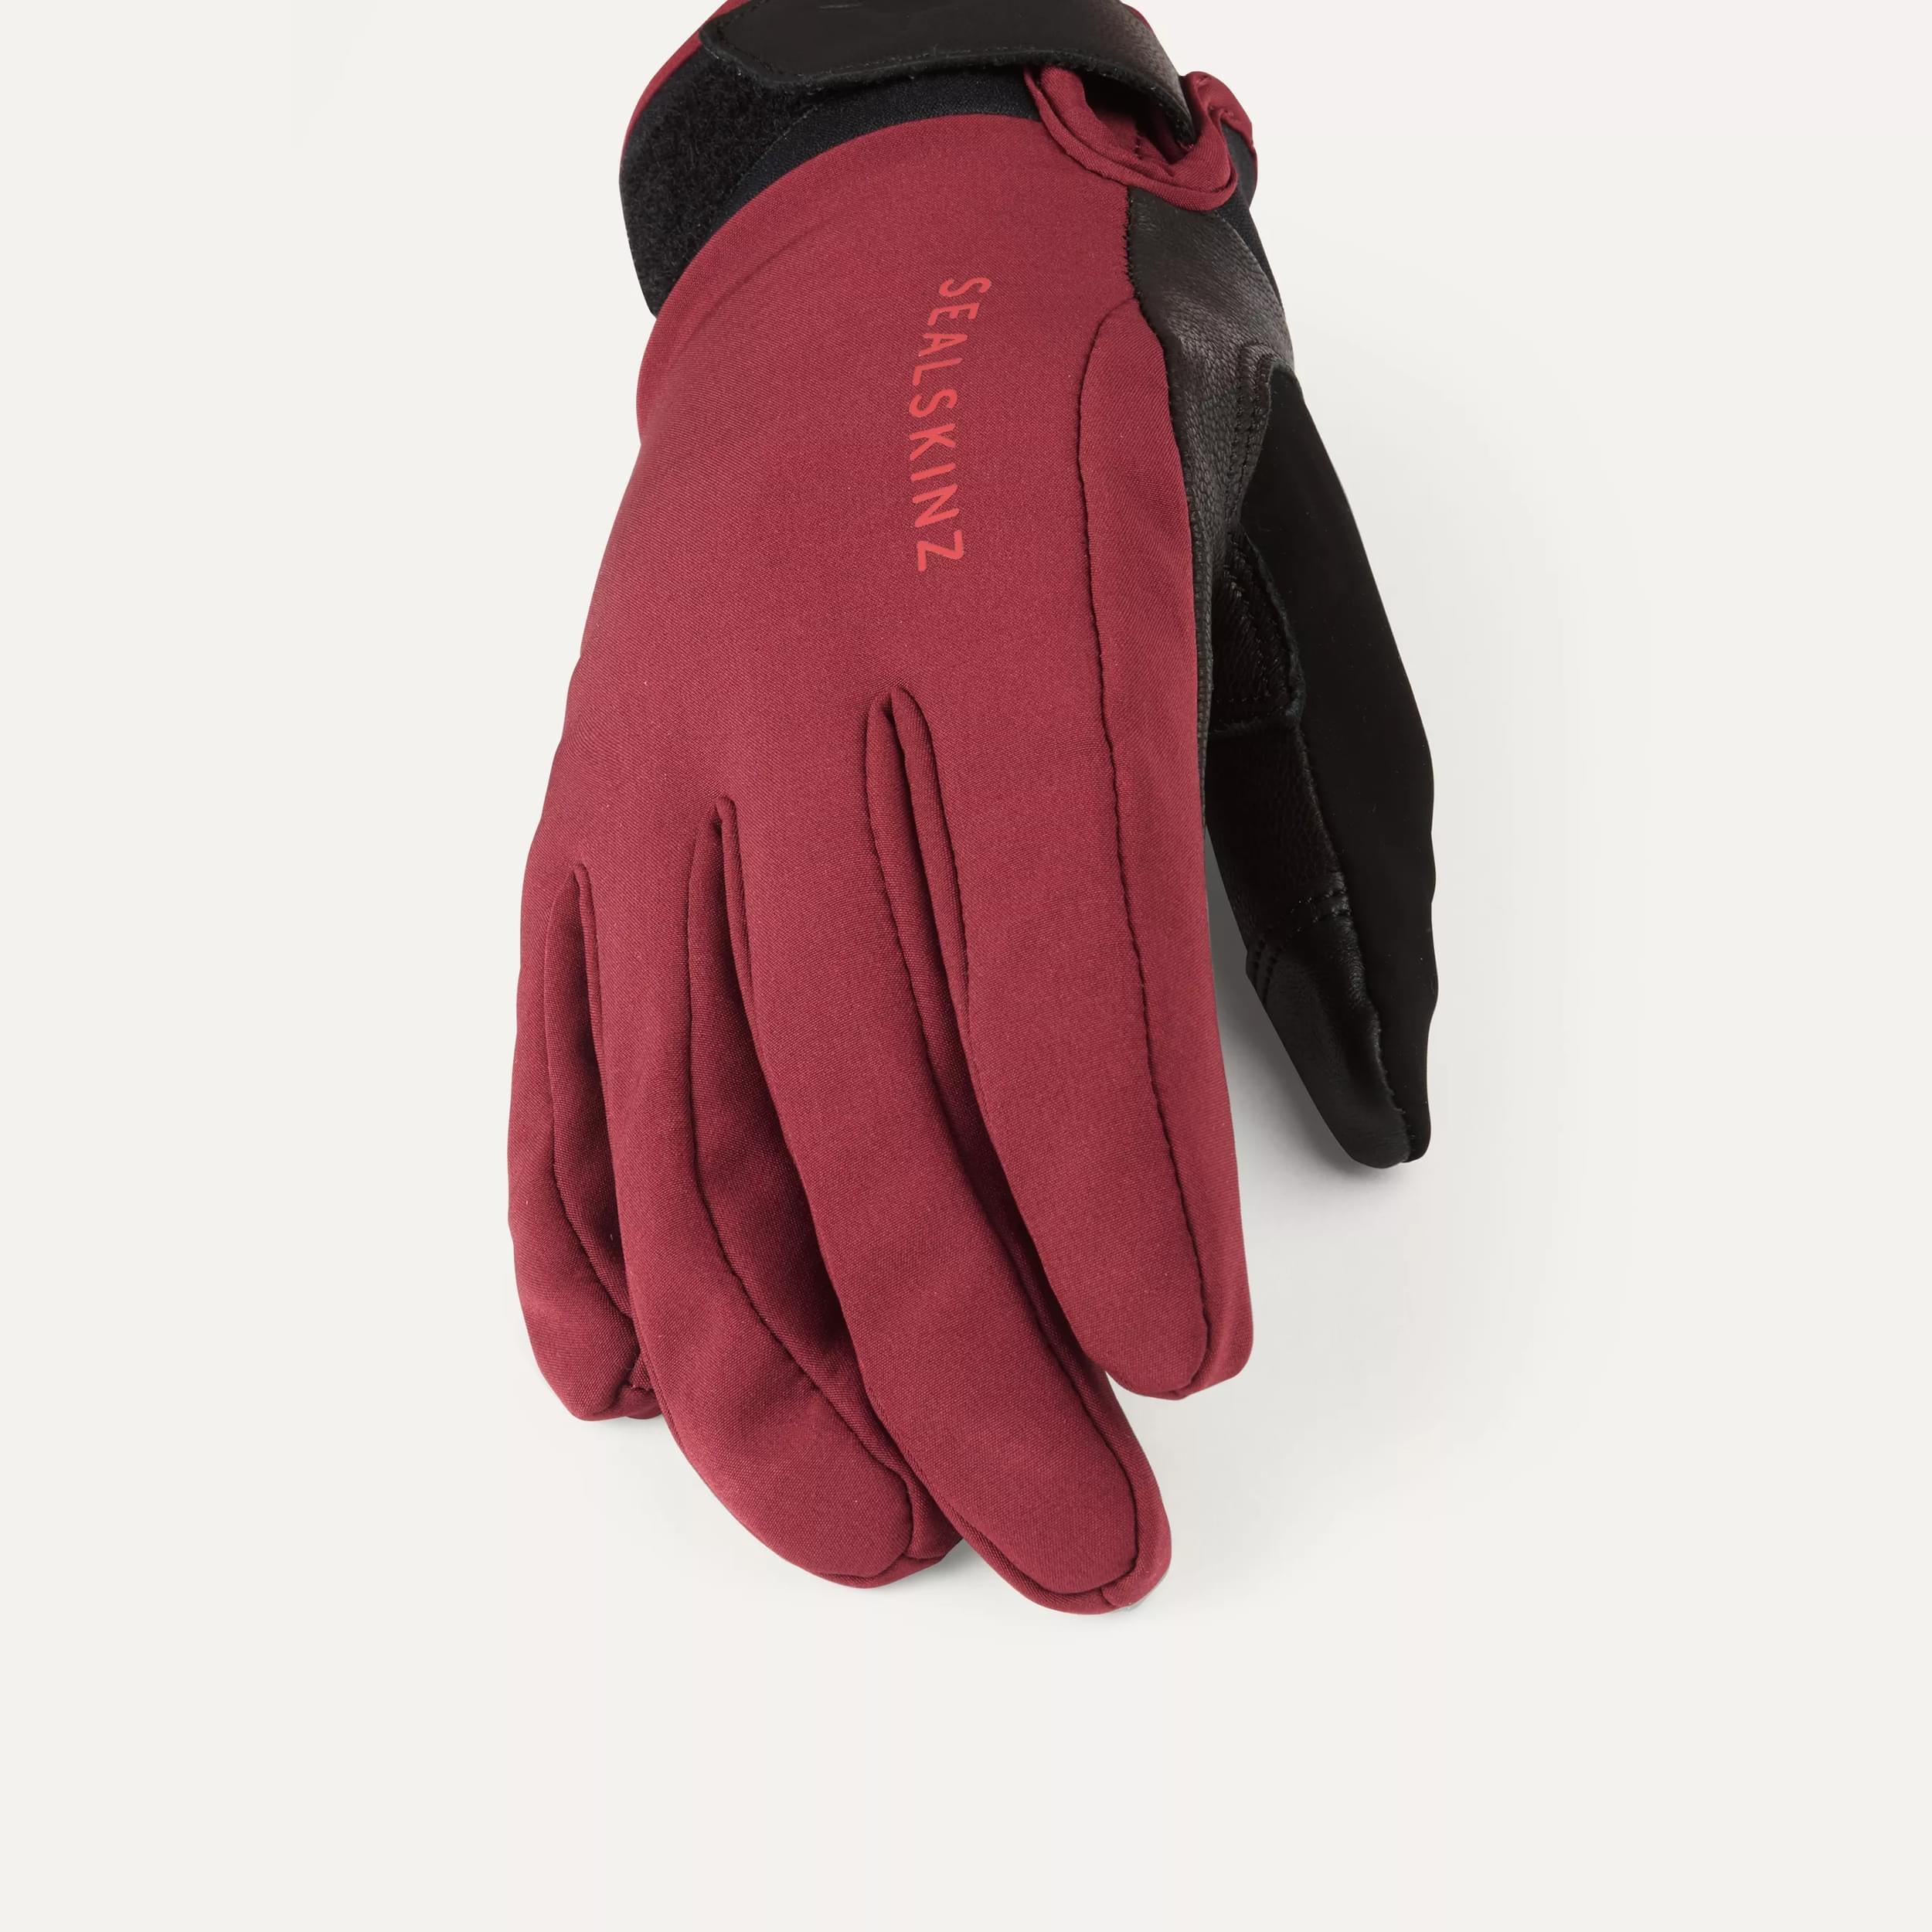 Kelling - Women's Waterproof All Weather Insulated Glove